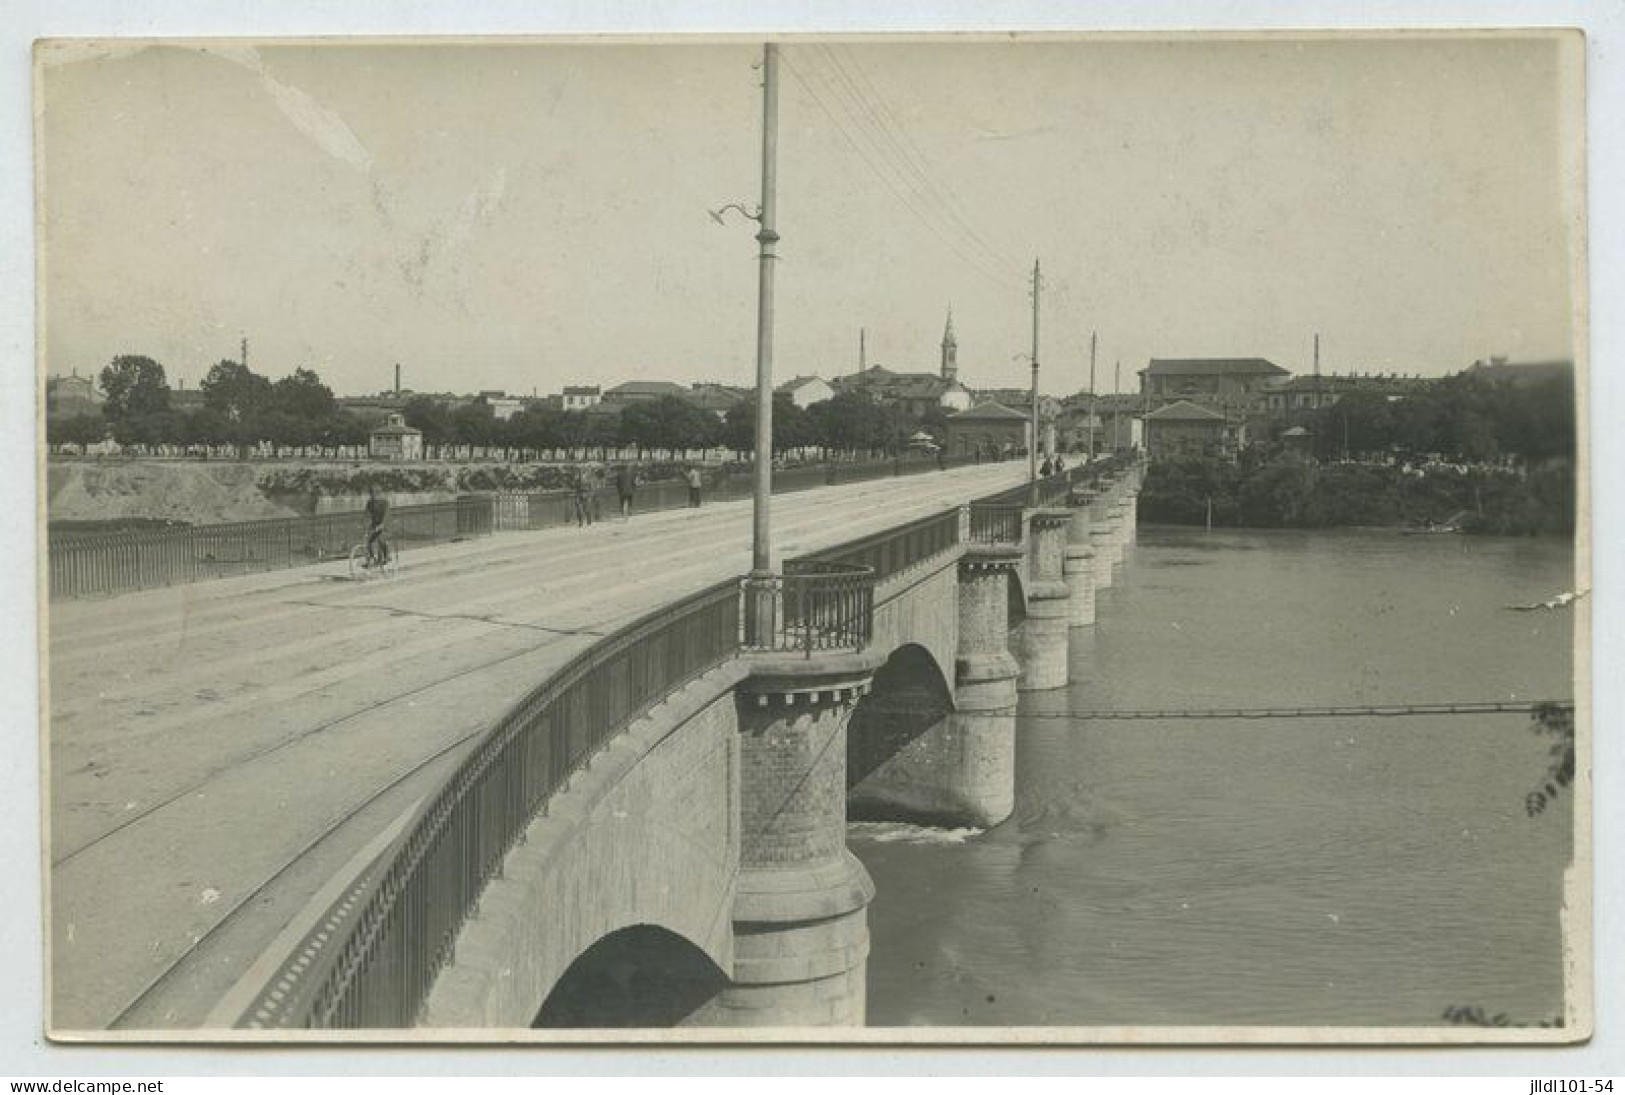 Alessandria, Ponte Sul Tanaro (lt8) Cpa + Photo D'édition - Alessandria